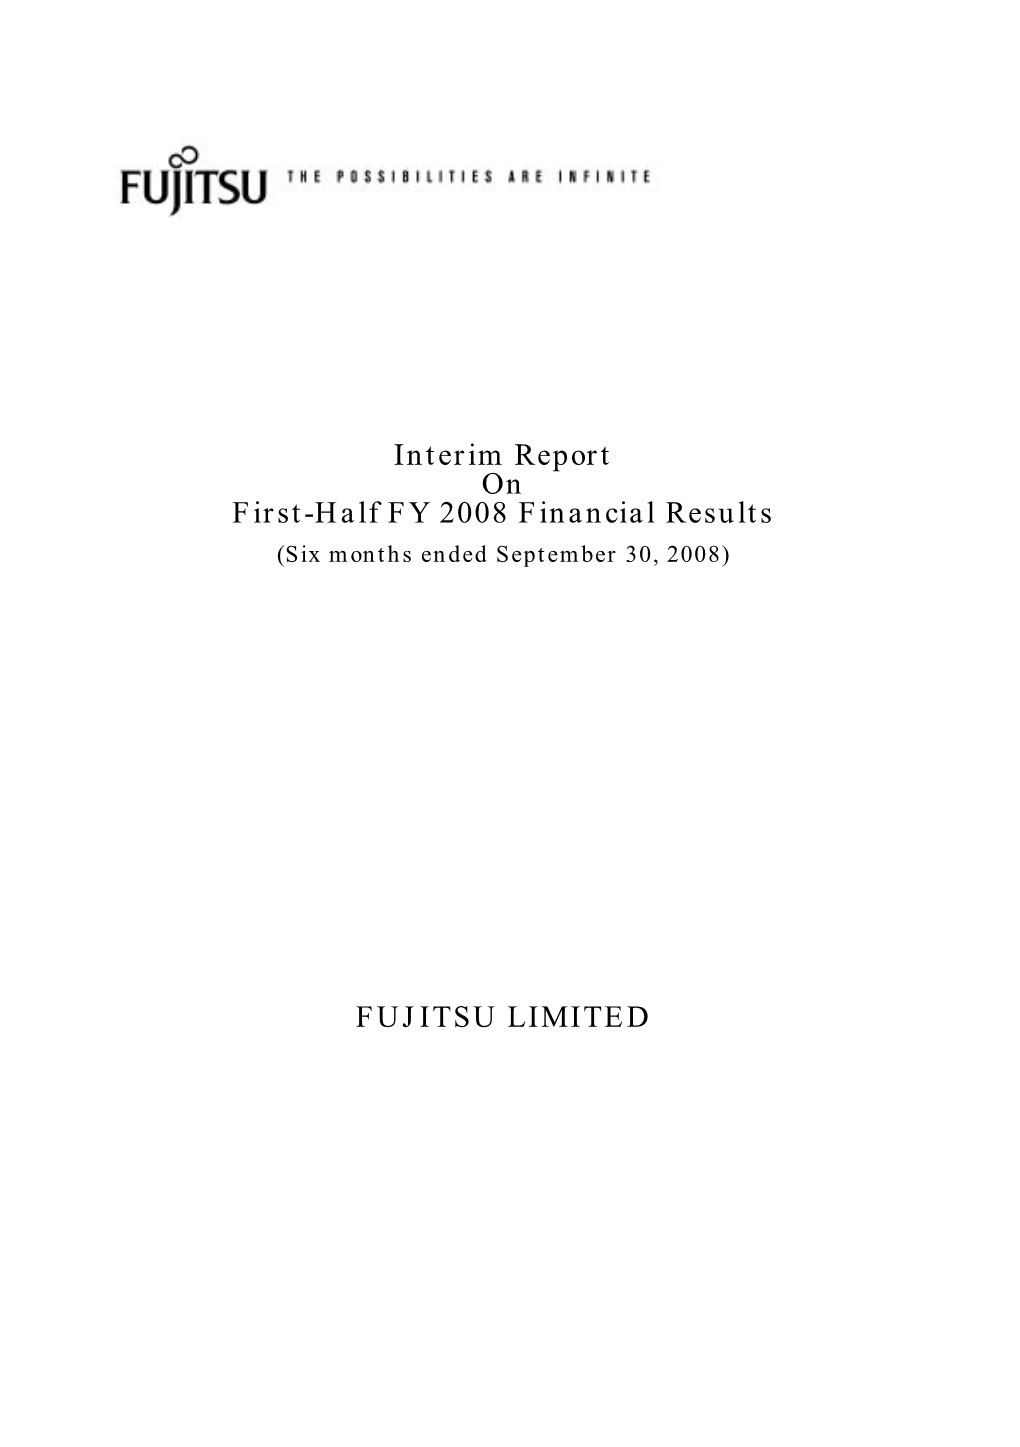 Interim Report on First-Half FY 2008 Financial Results FUJITSU LIMITED